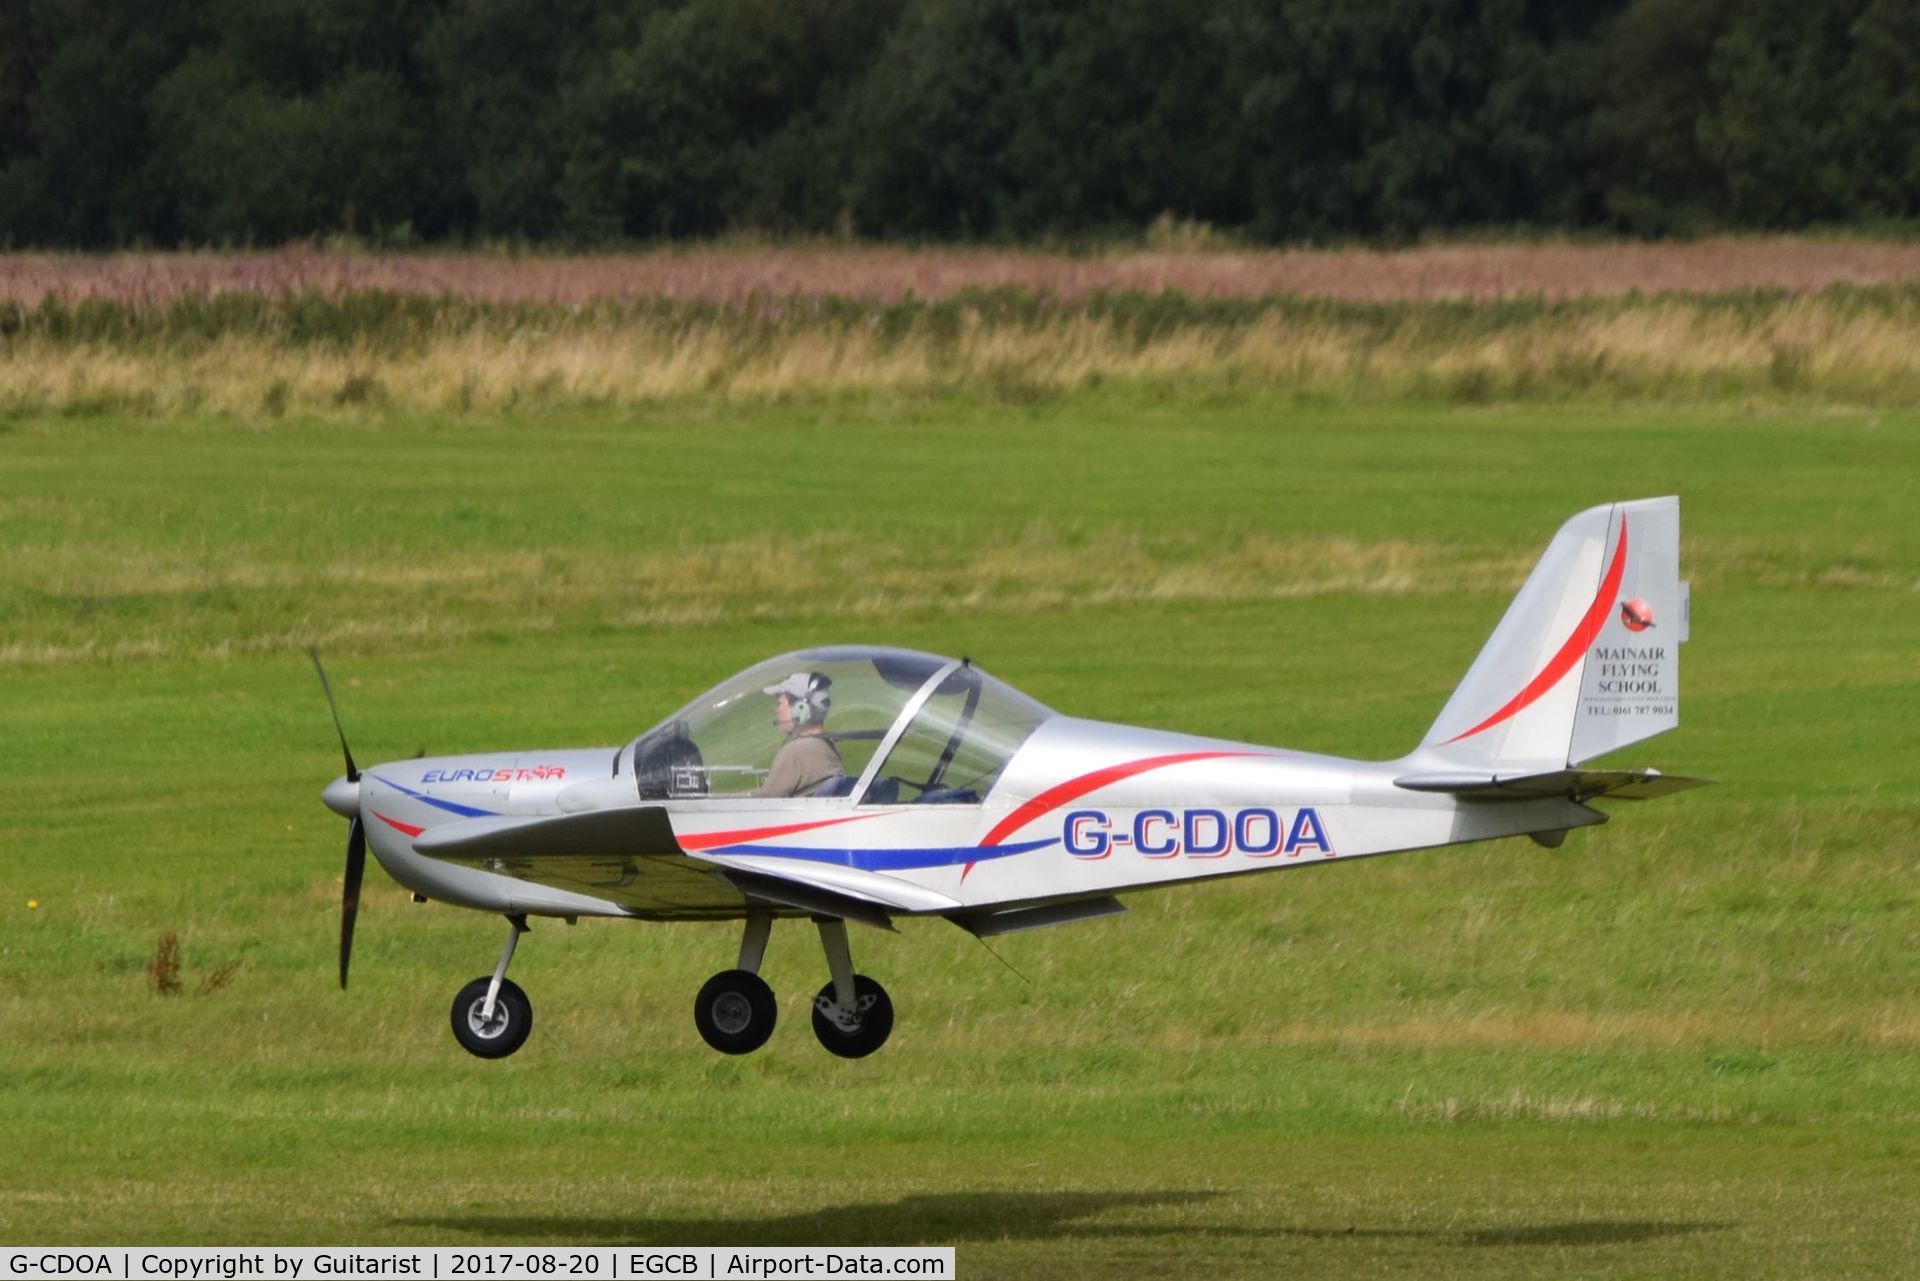 G-CDOA, 2005 Evektor-Aerotechnik EV-97 Teameurostar UK C/N 2506, City Airport Manchester